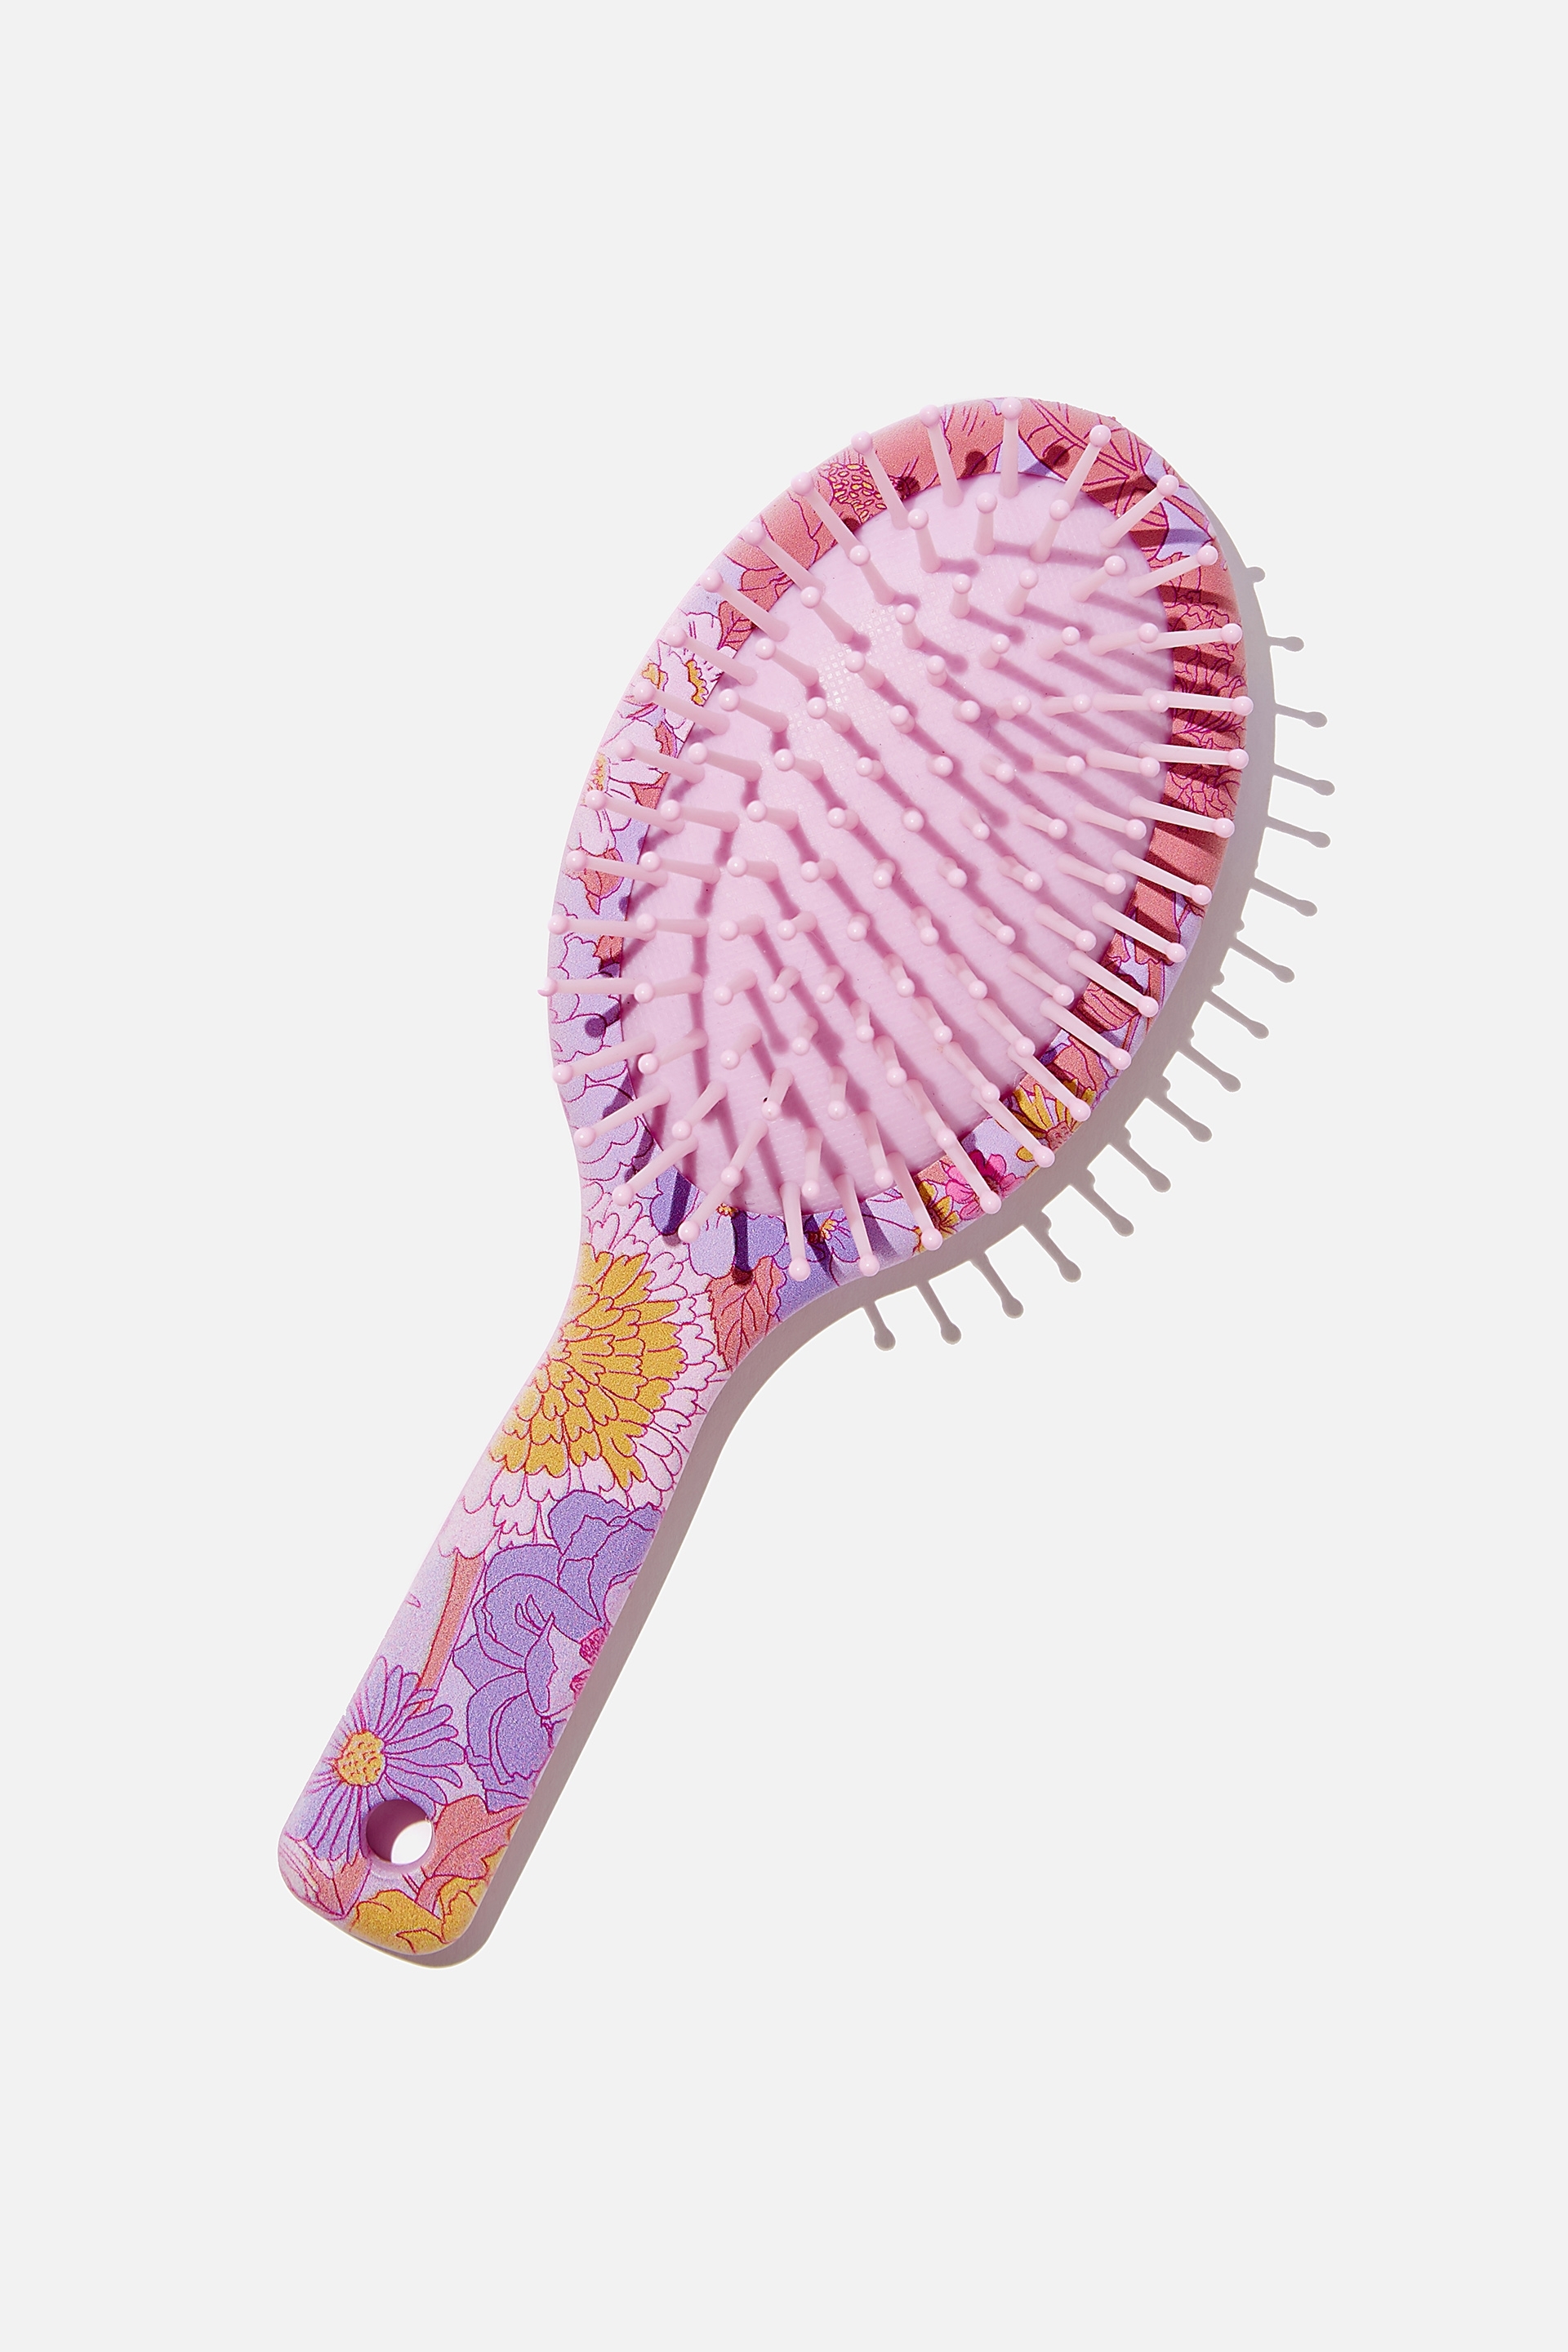 Cotton On Kids - Kids Hair Brush - Boho floral